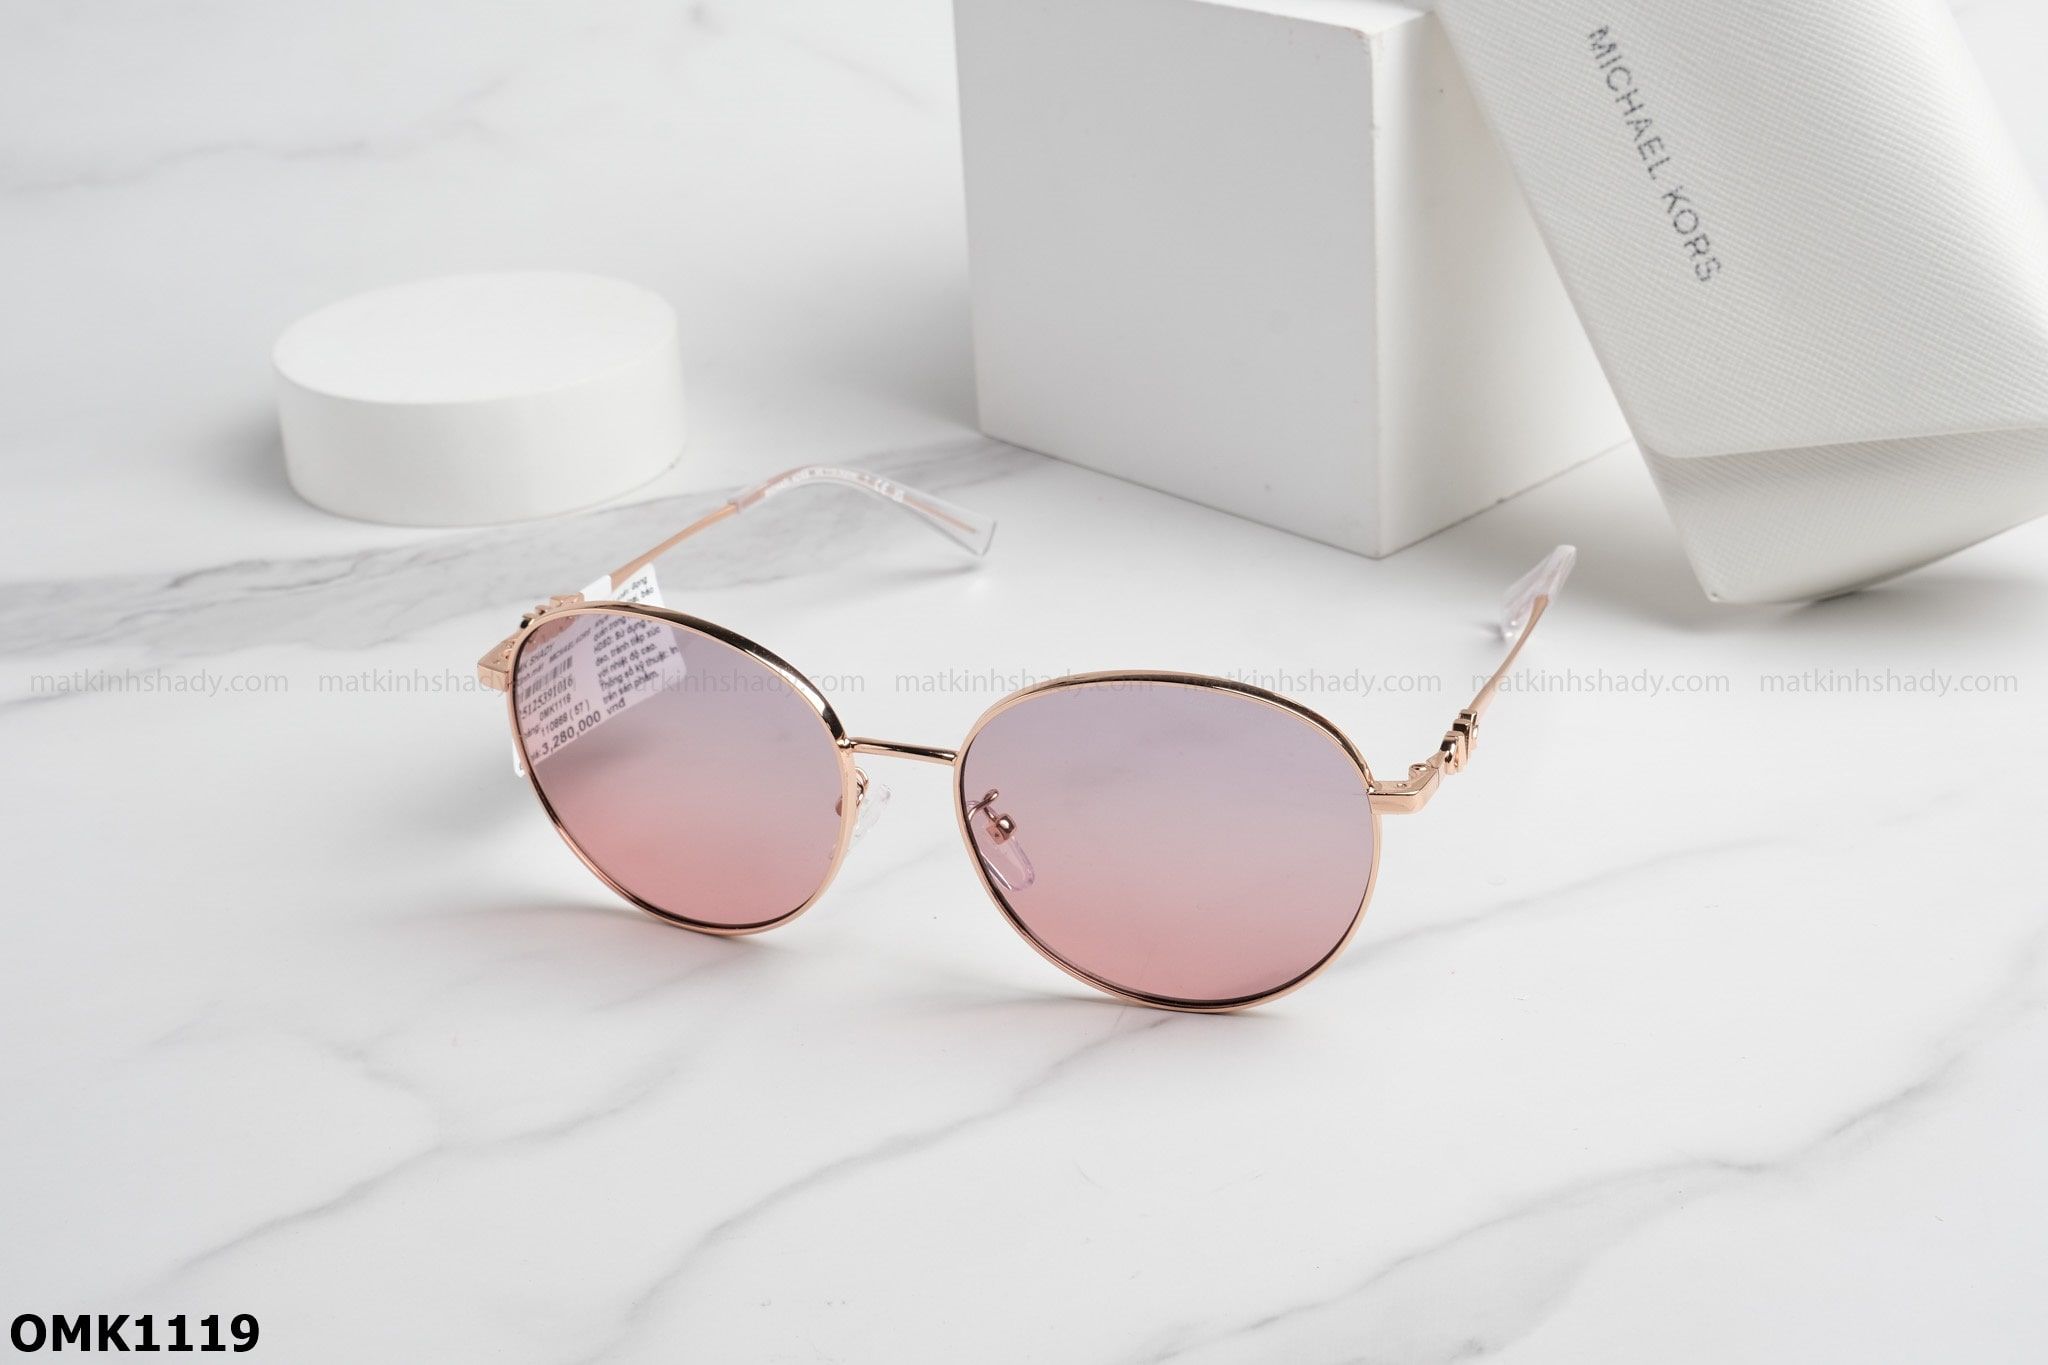  Michael Kors Eyewear - Sunglasses - OMK1119 